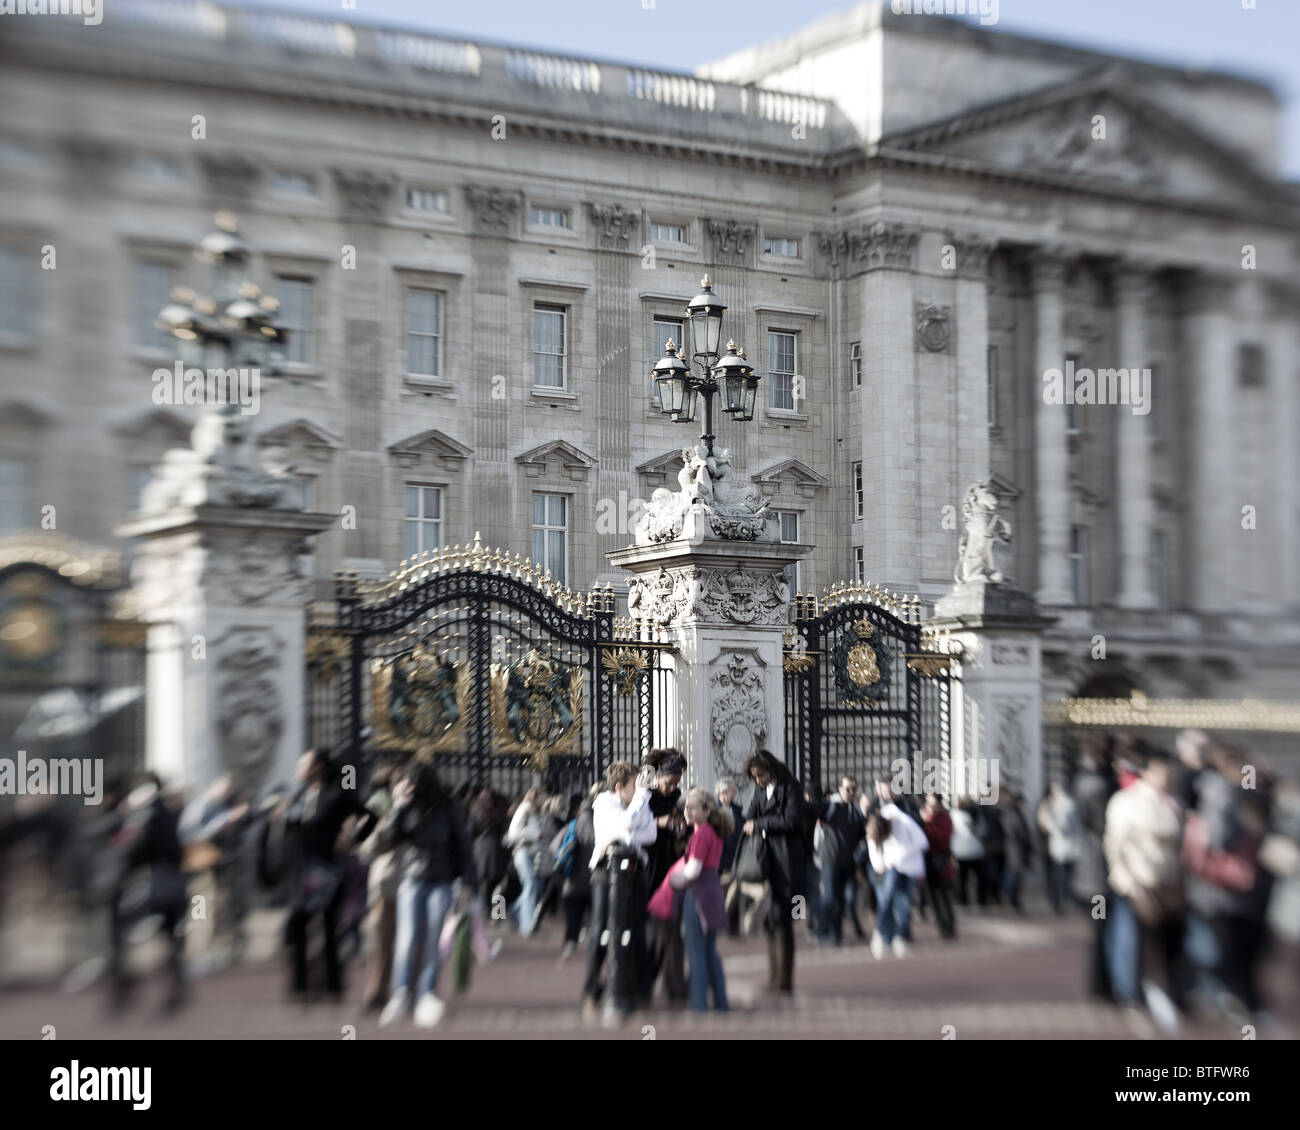 Main Gates At Buckingham Palace London England - Selective Focus used To Highlight The Gates And Ironwork Stock Photo